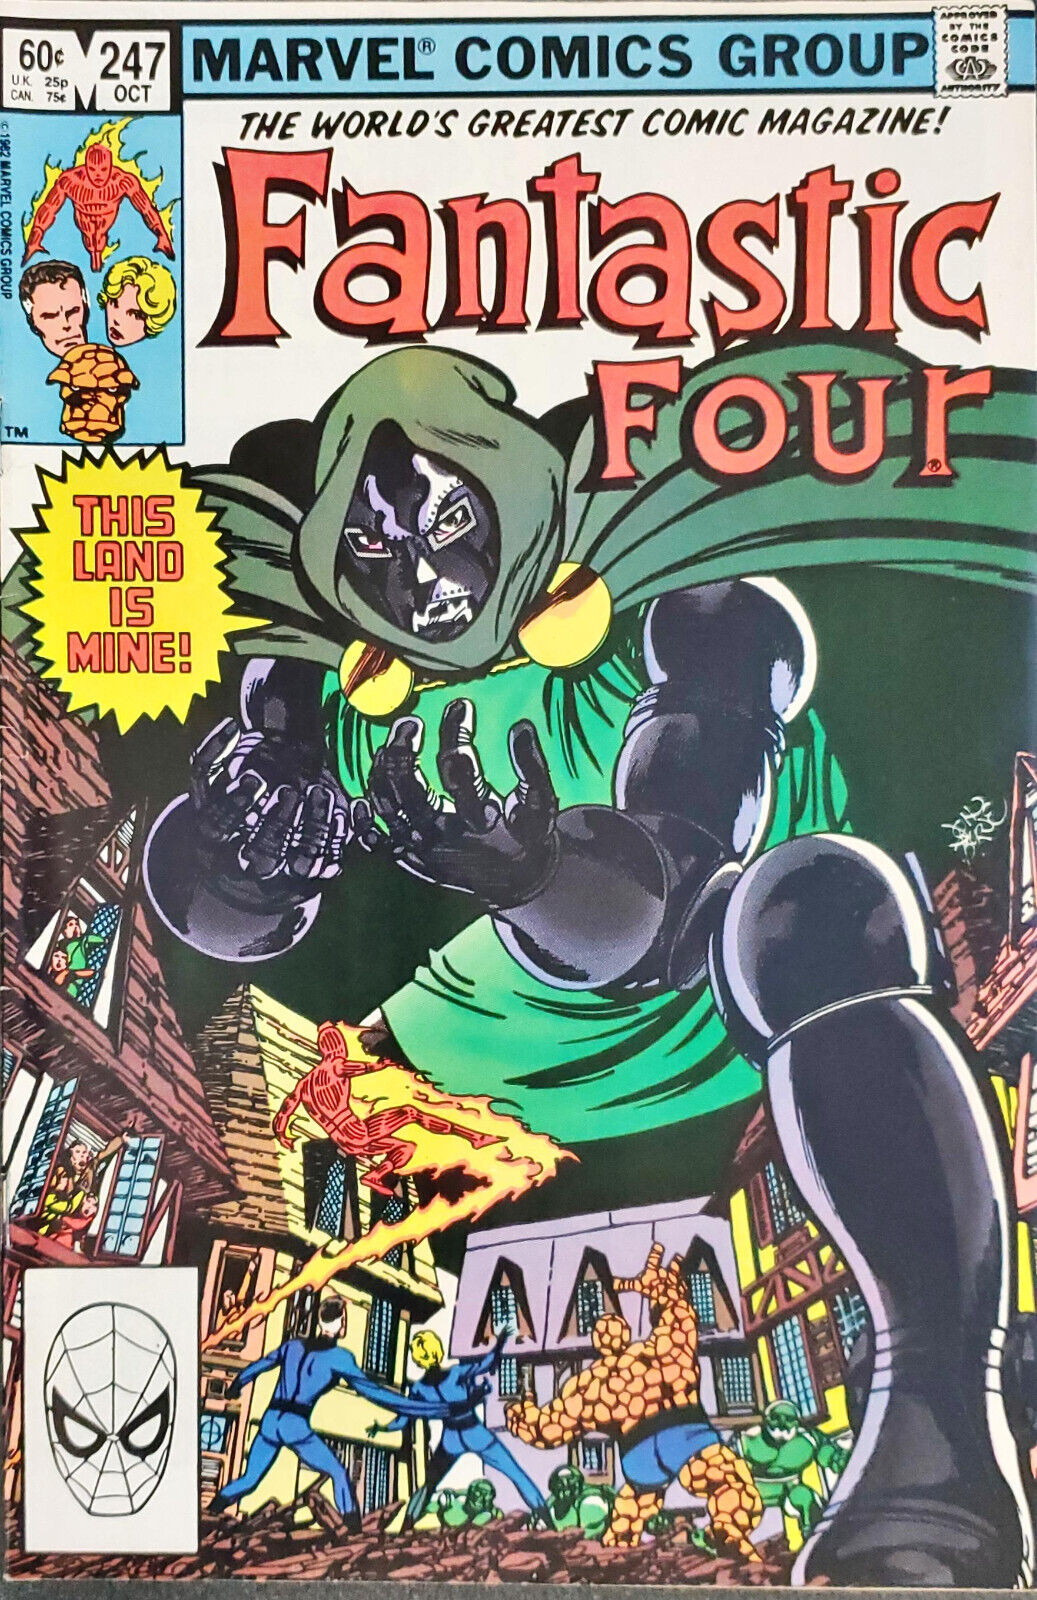 Fantastic Four : #247 October 1982